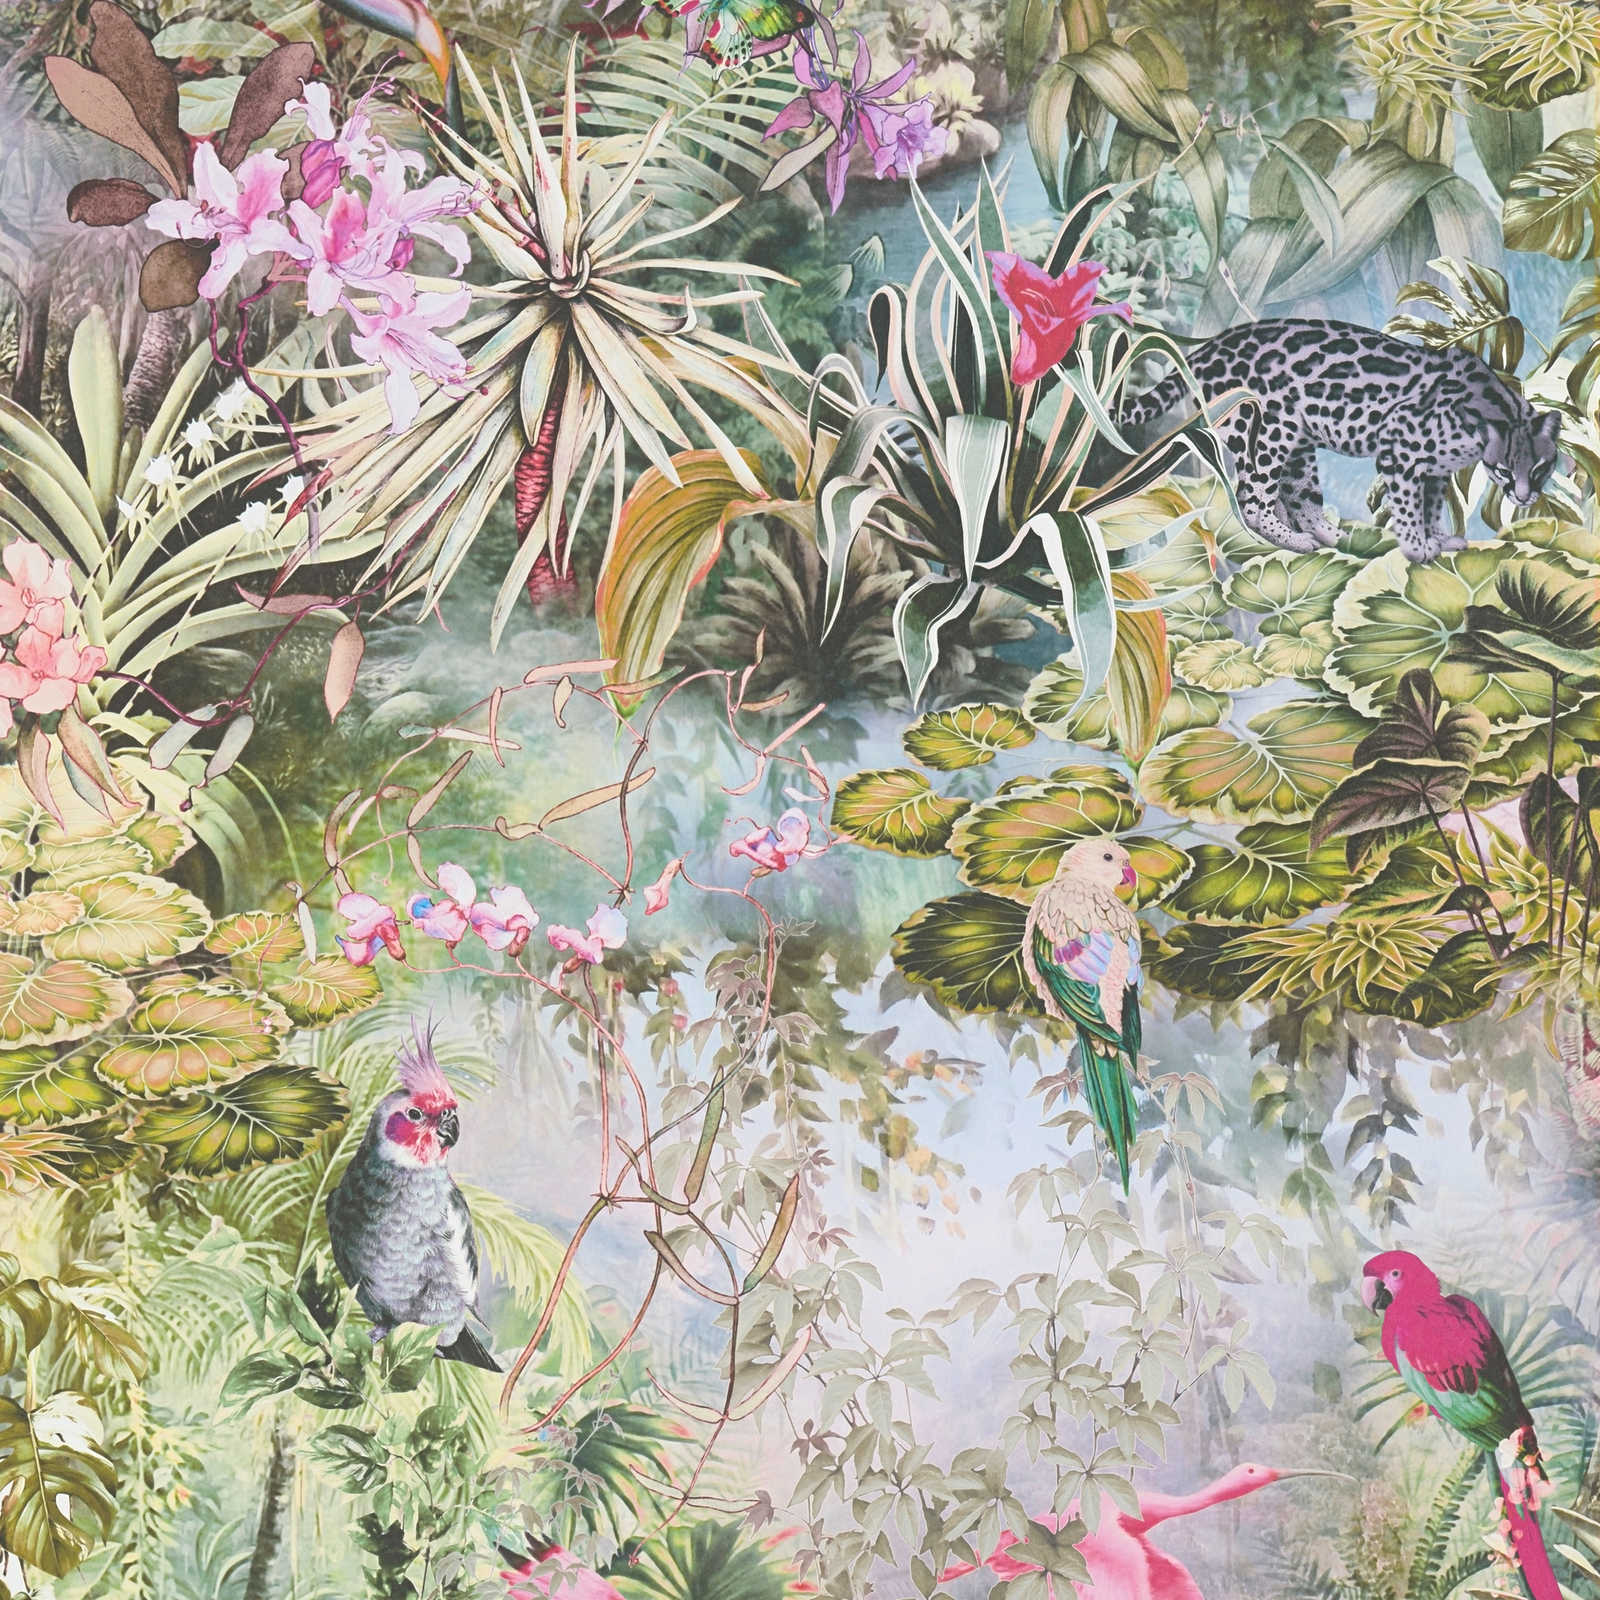             Jungle wallpaper parrot & leopard - green, pink, grey
        